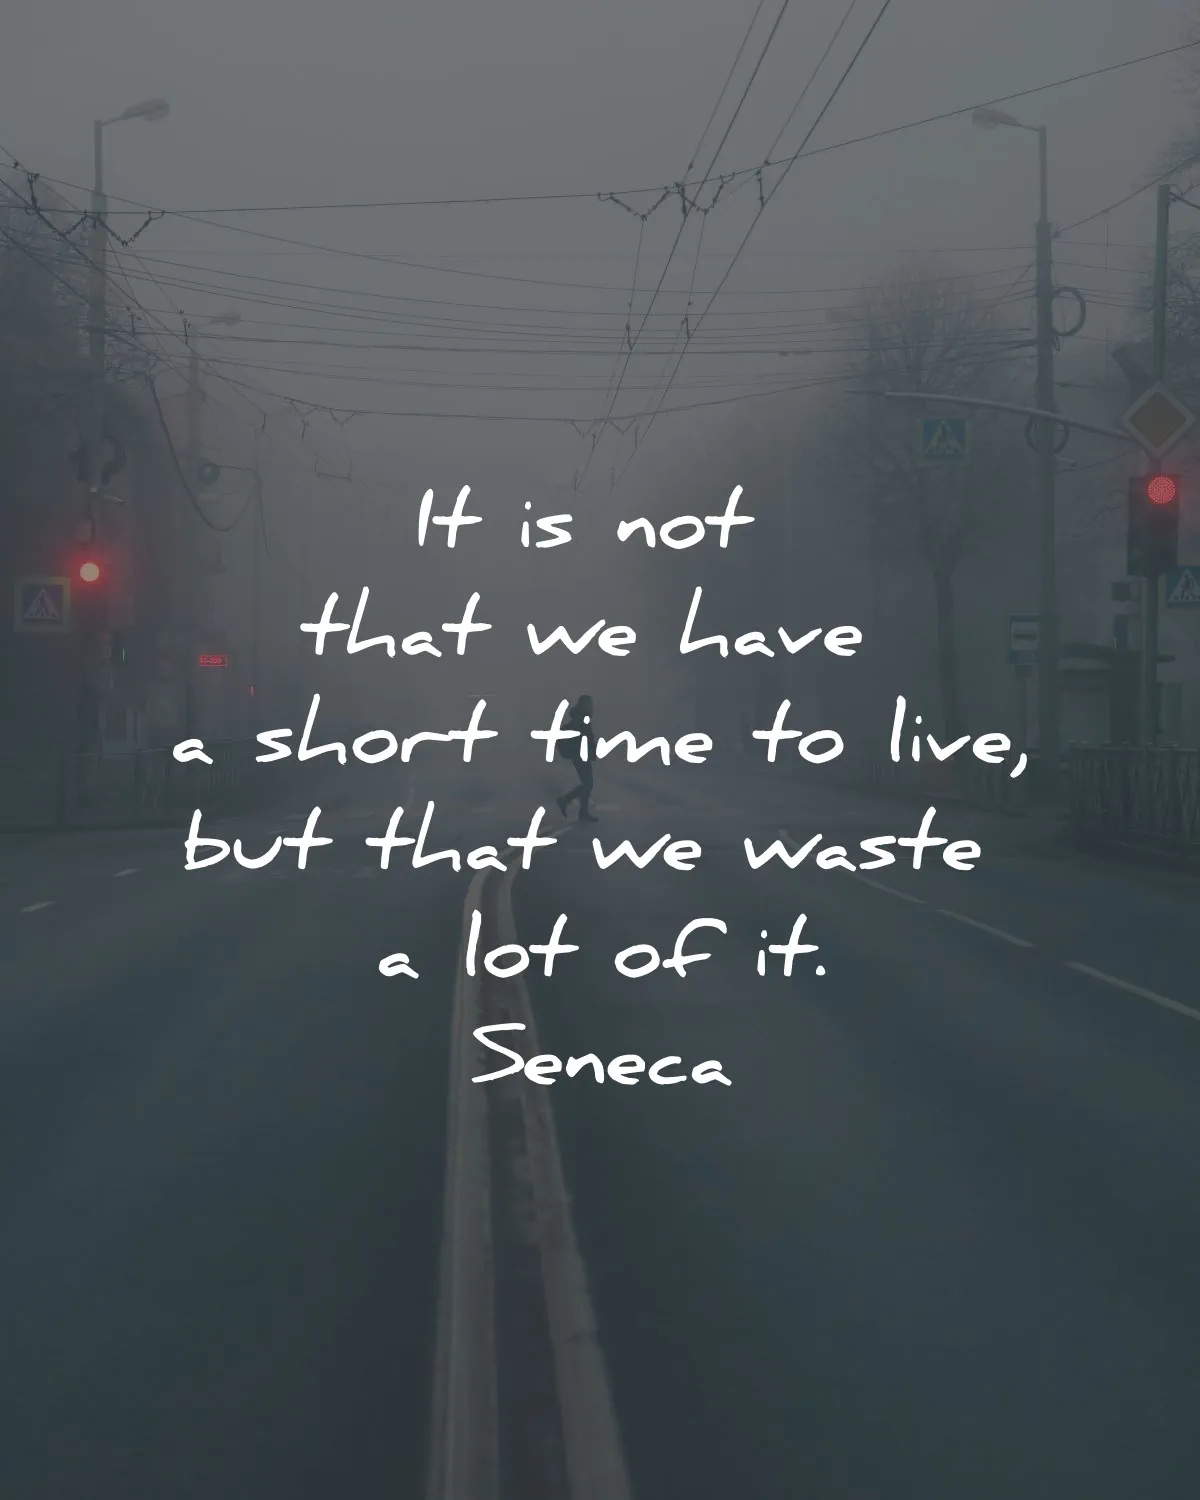 seneca quotes not have short time live waste wisdom